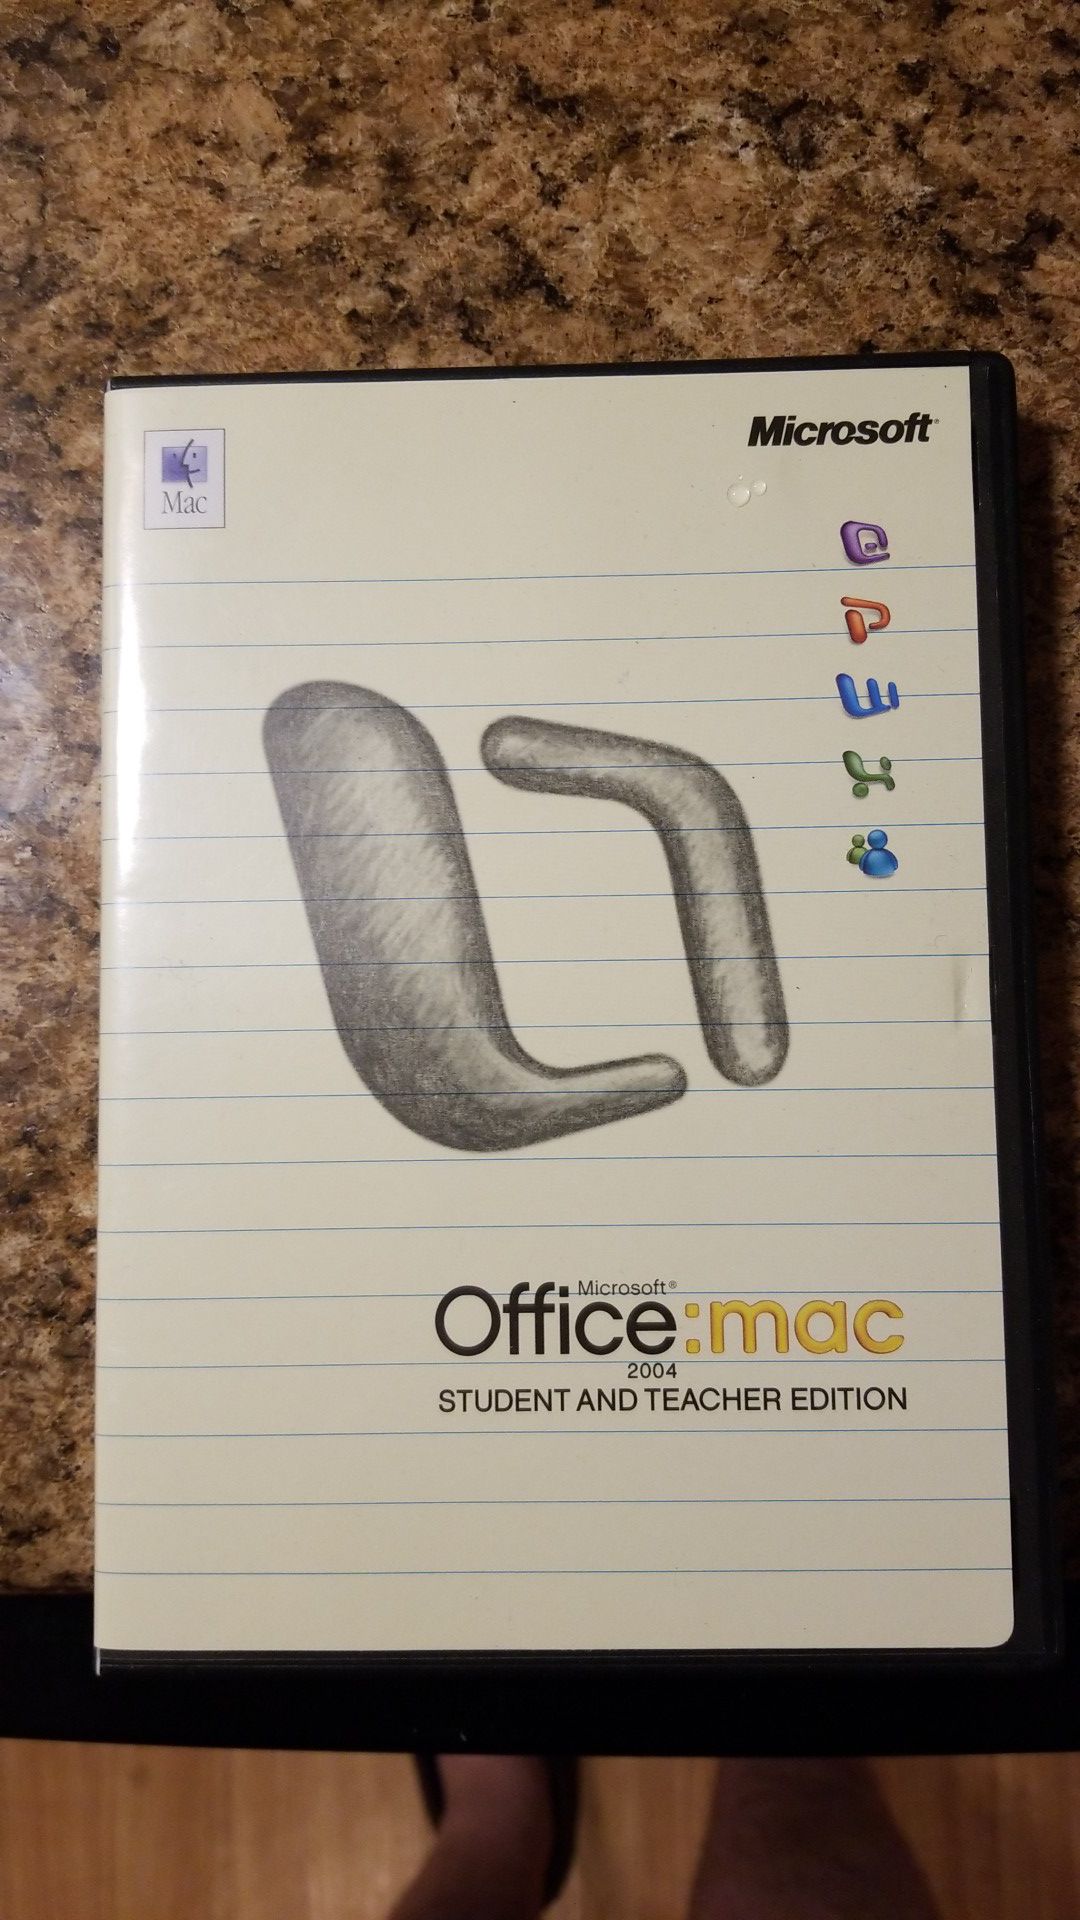 Miscroft office: MAC 2004 software